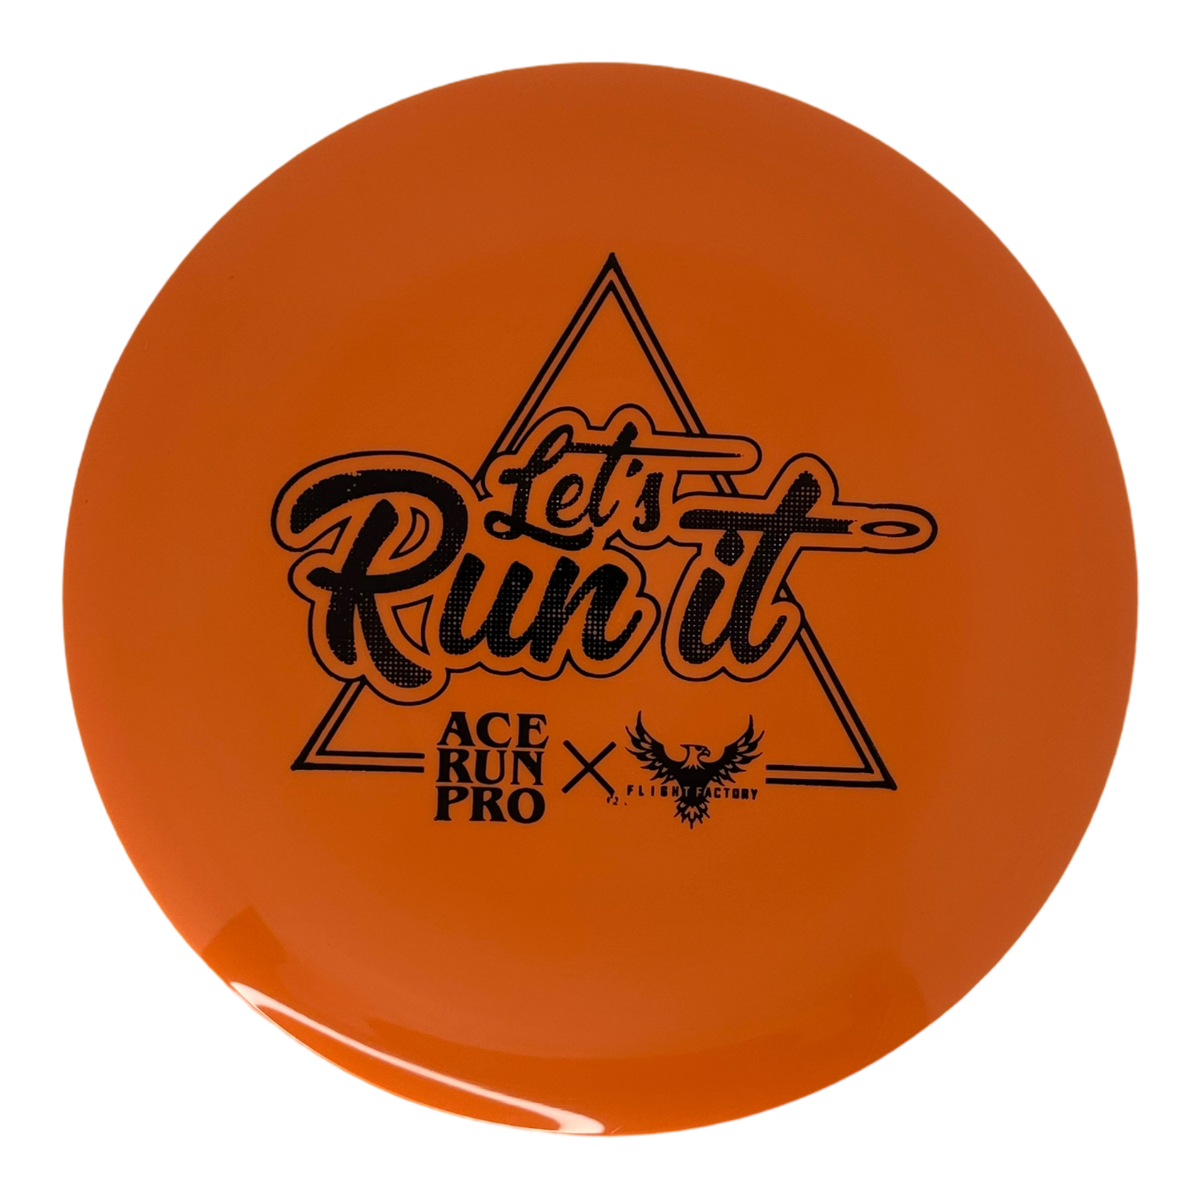 Innova Star Thunderbird - Ace Run Pro &quot;Let&#39;s Run It&quot;